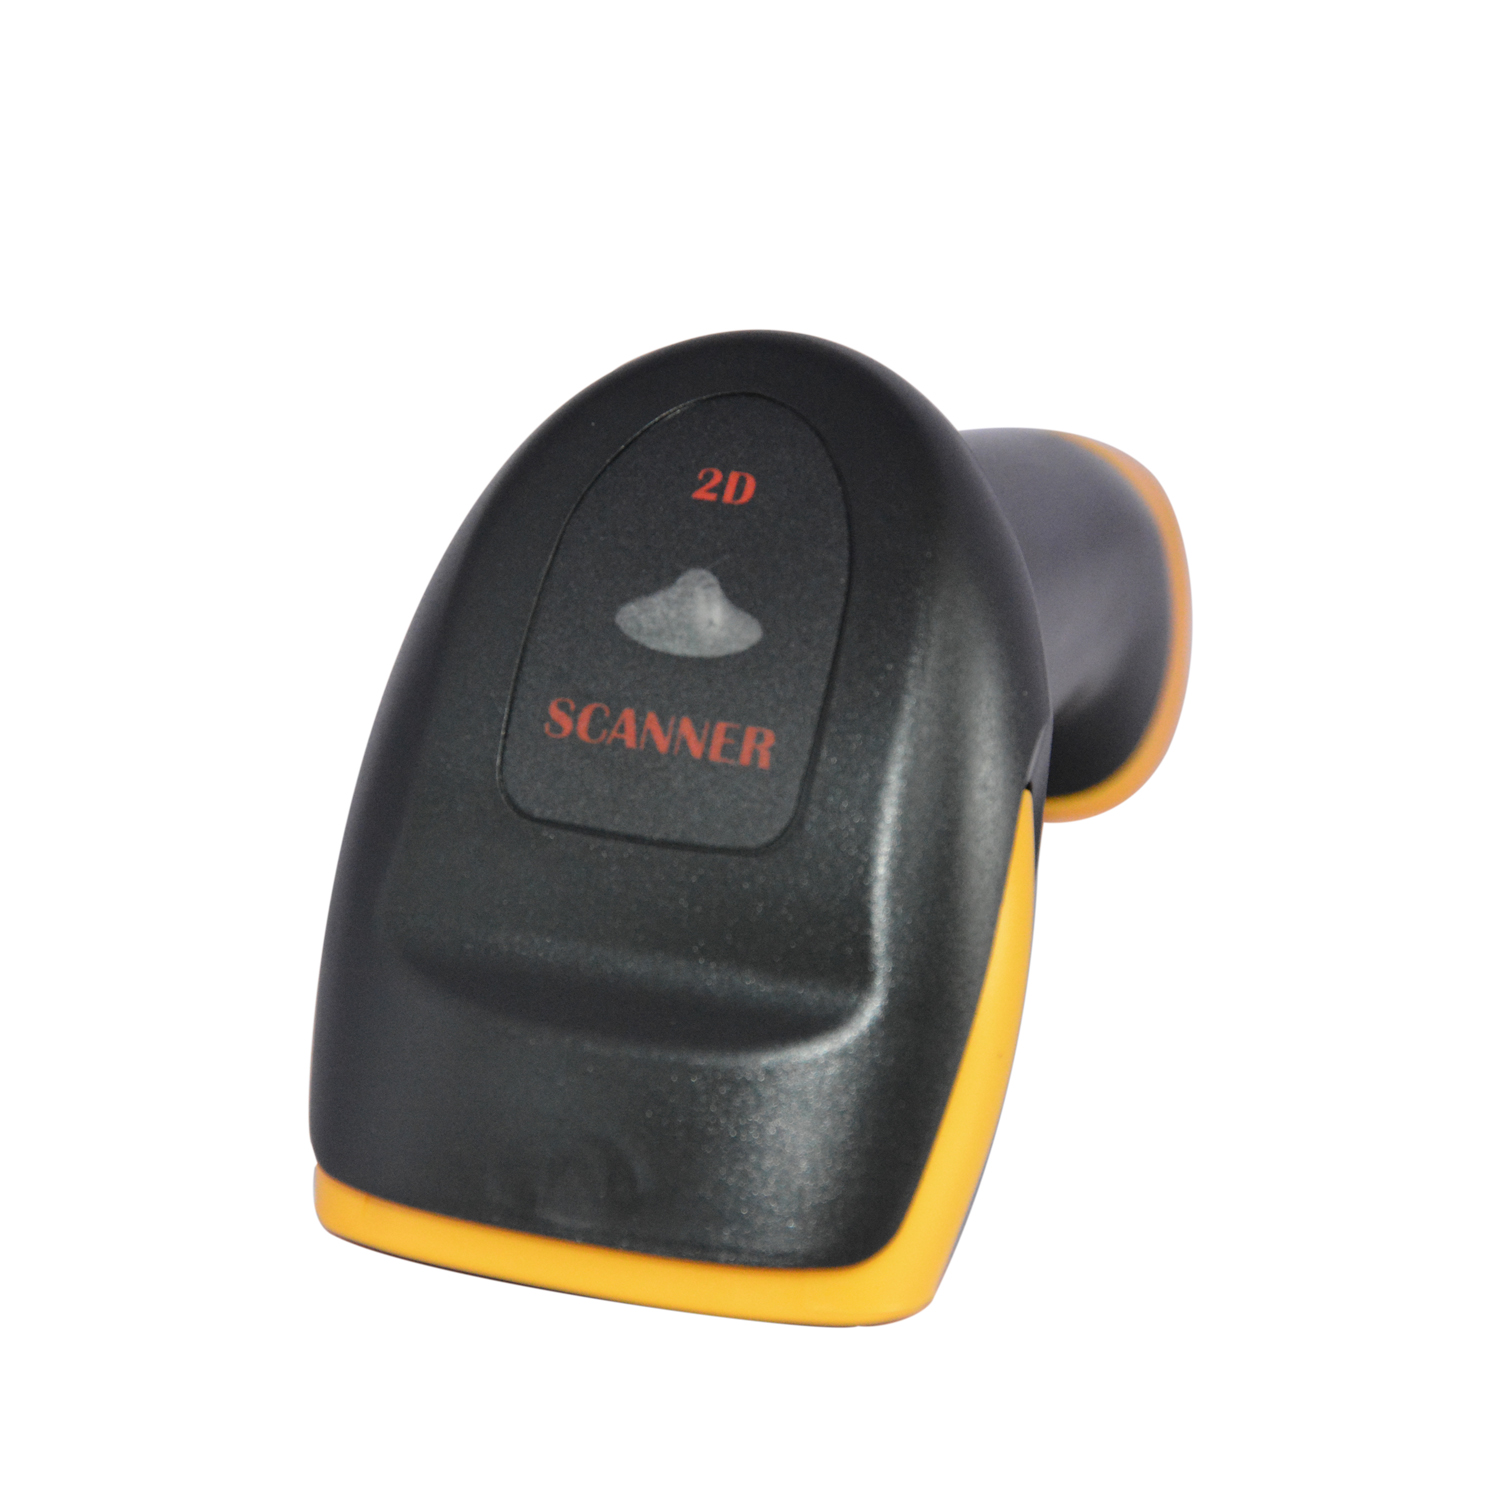 433MHz RS232 Virtual Serial Handheld 2D Barcode Scanner HS-6412